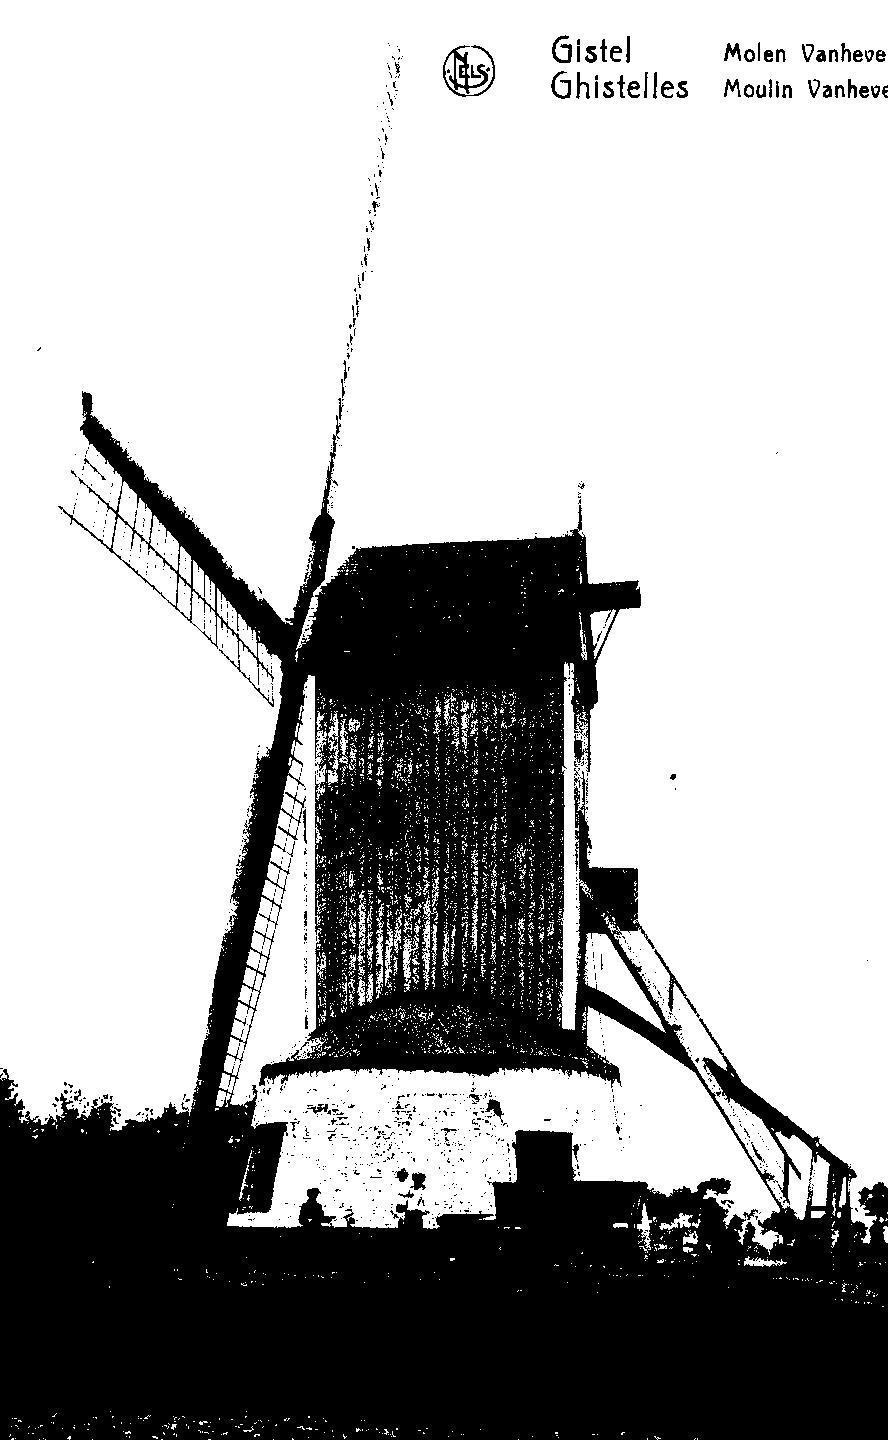 Gistel-molen Vanhevel - Gistel